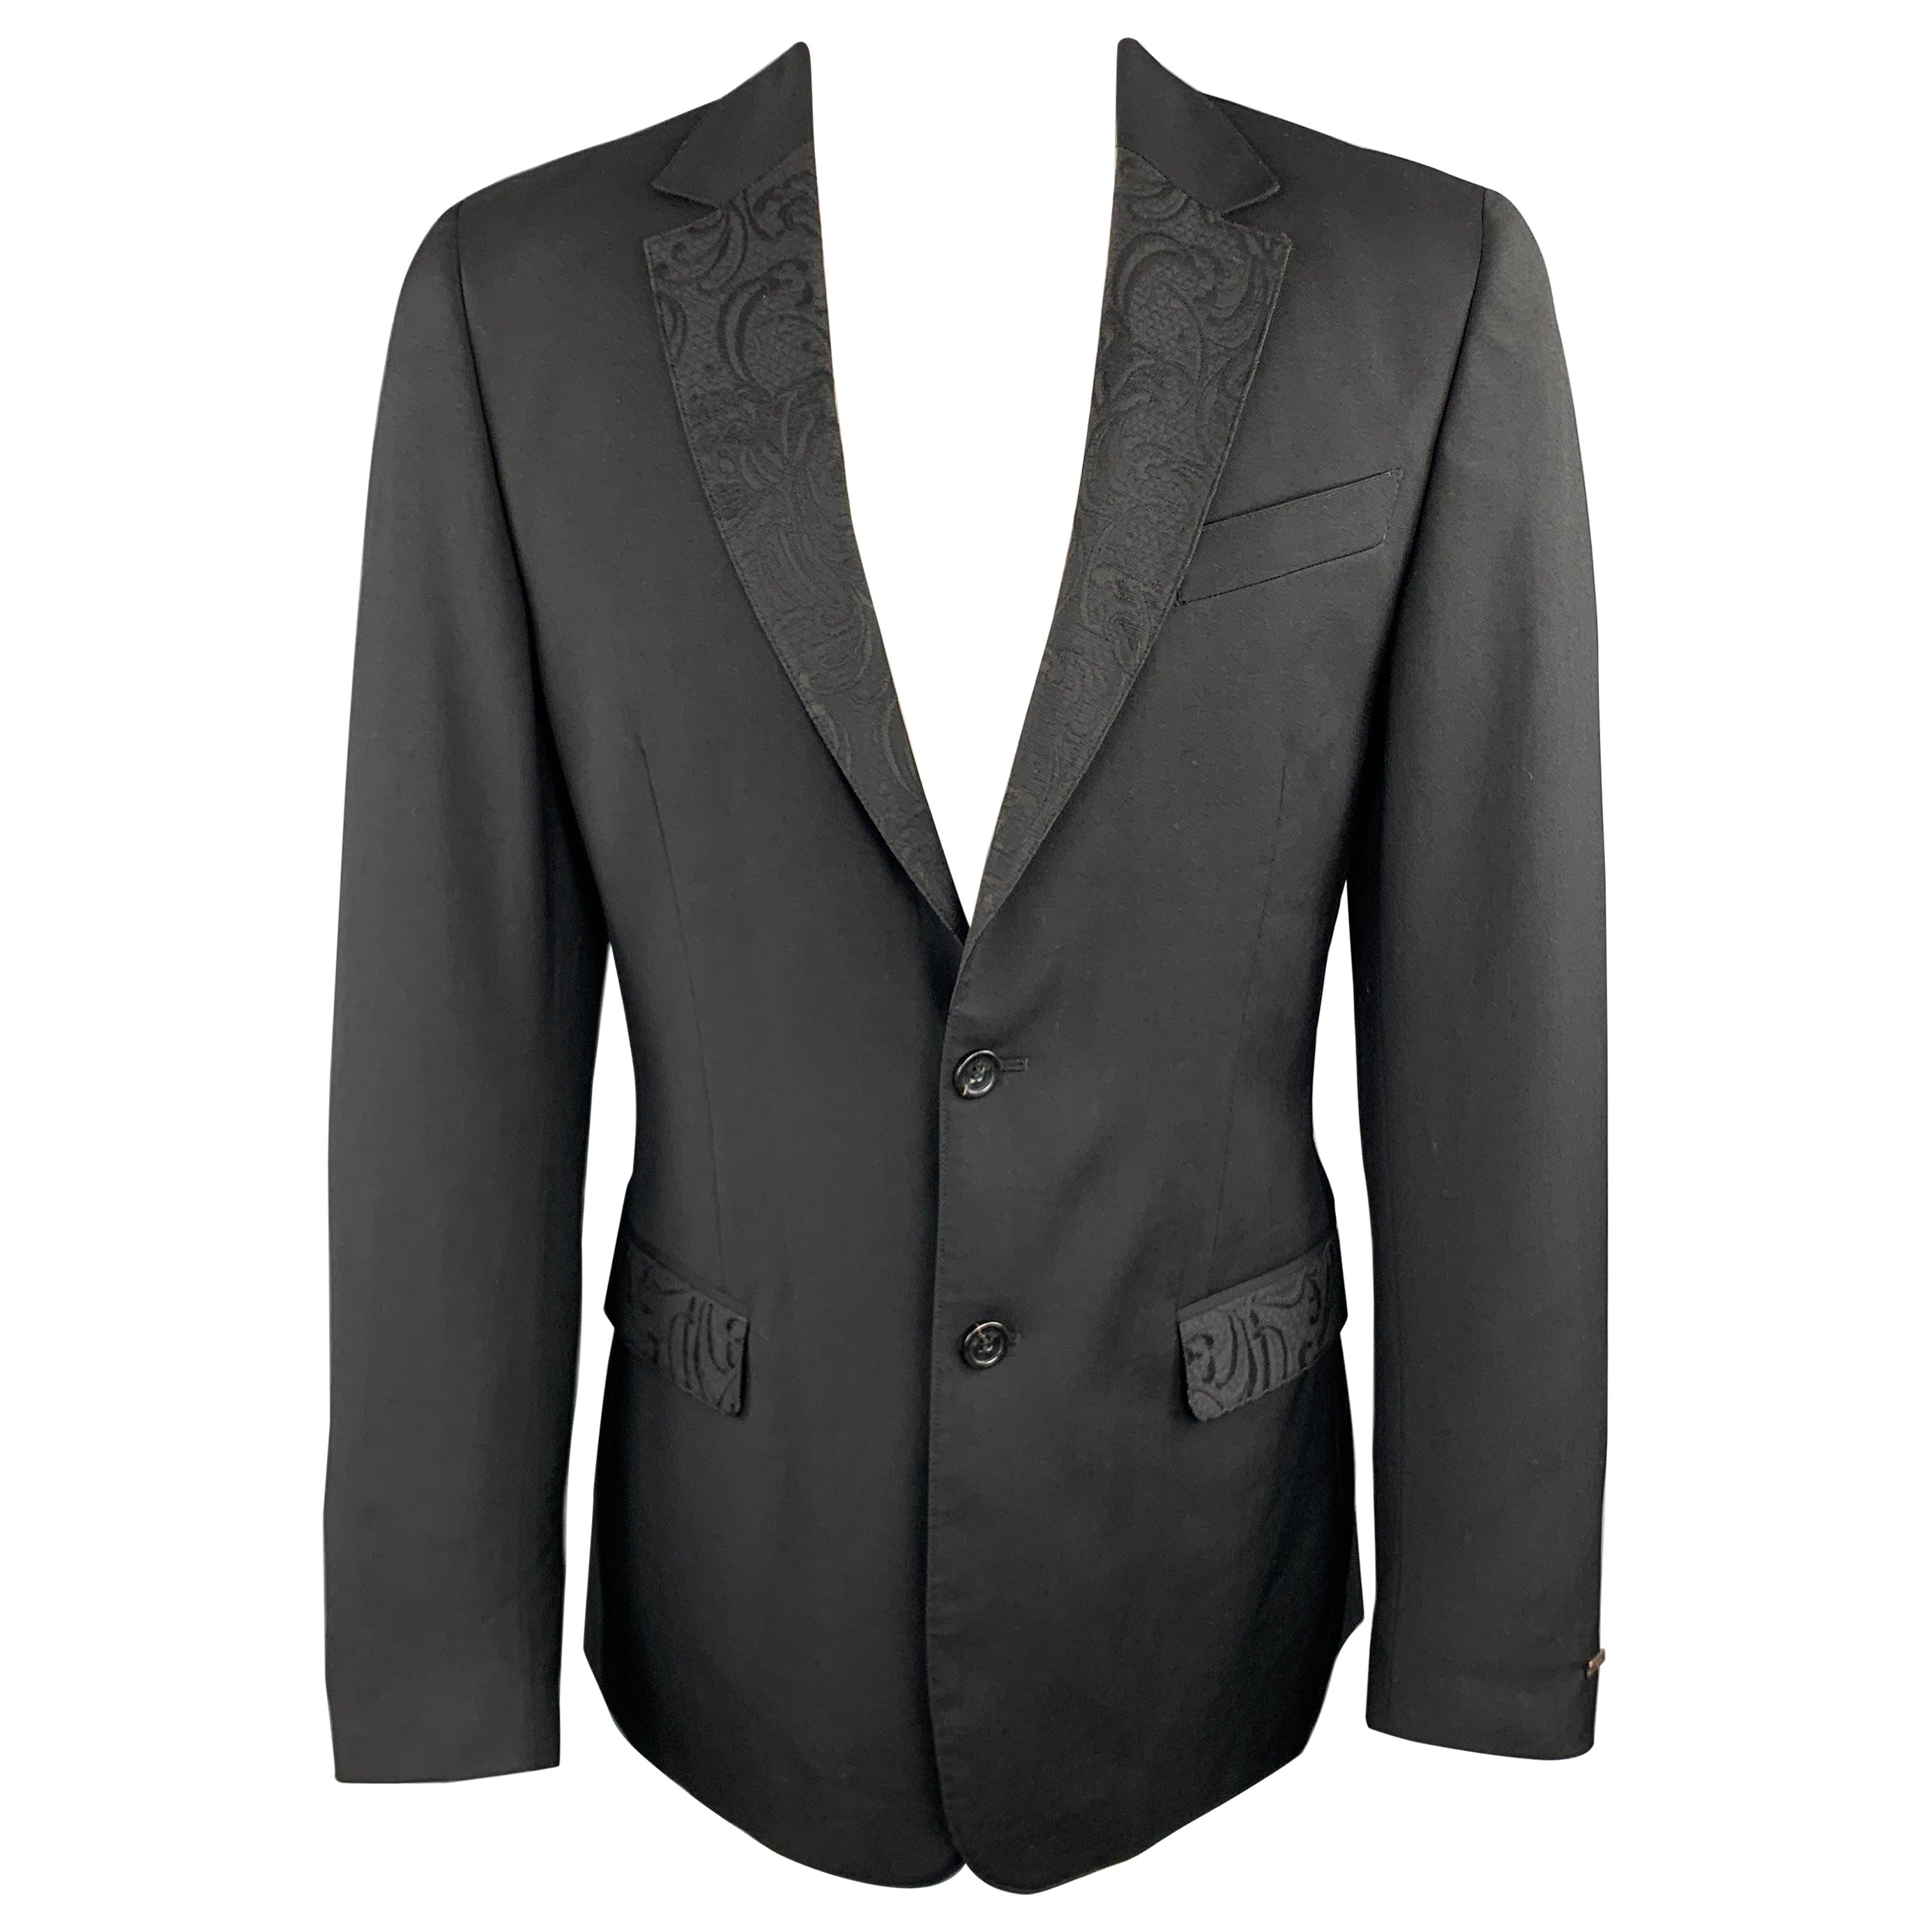 JUST CAVALLI Size 40 Black Wool Lace Notch Lapel Sport Coat For Sale